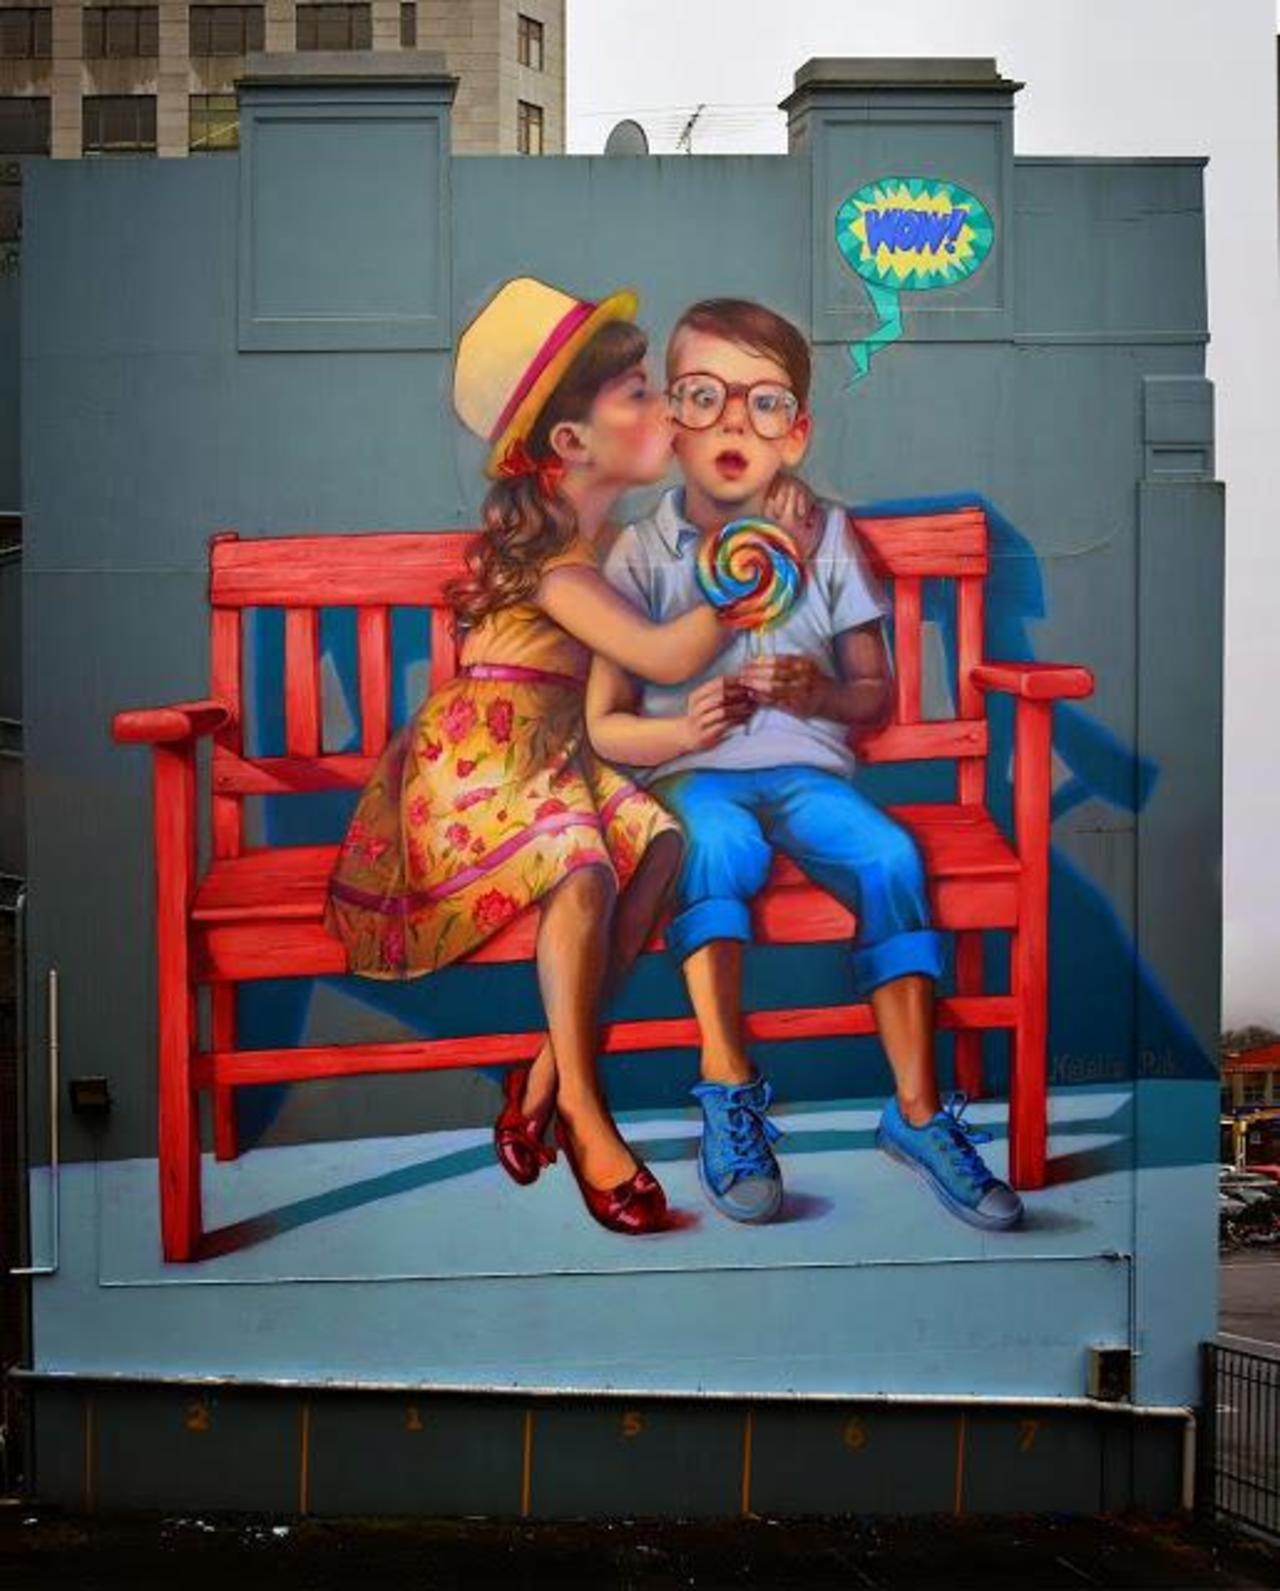 "Love Is In The Air" a new mural by Natalia Rak in Dunedin, New Zealand. #StreetArt #Graffiti #Mural http://t.co/mZMcp5839a